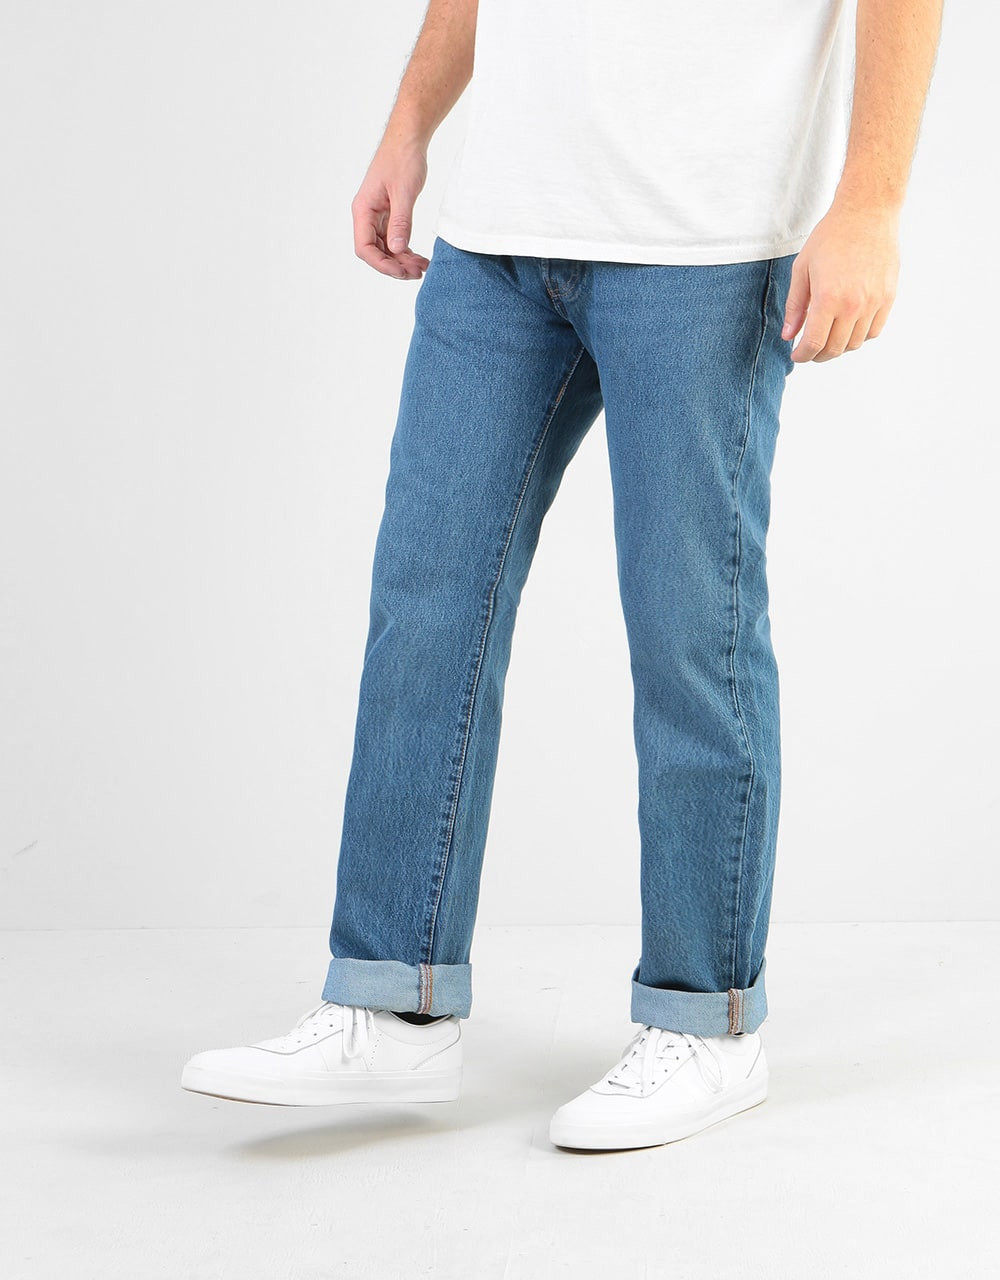 levis 501 skate jeans